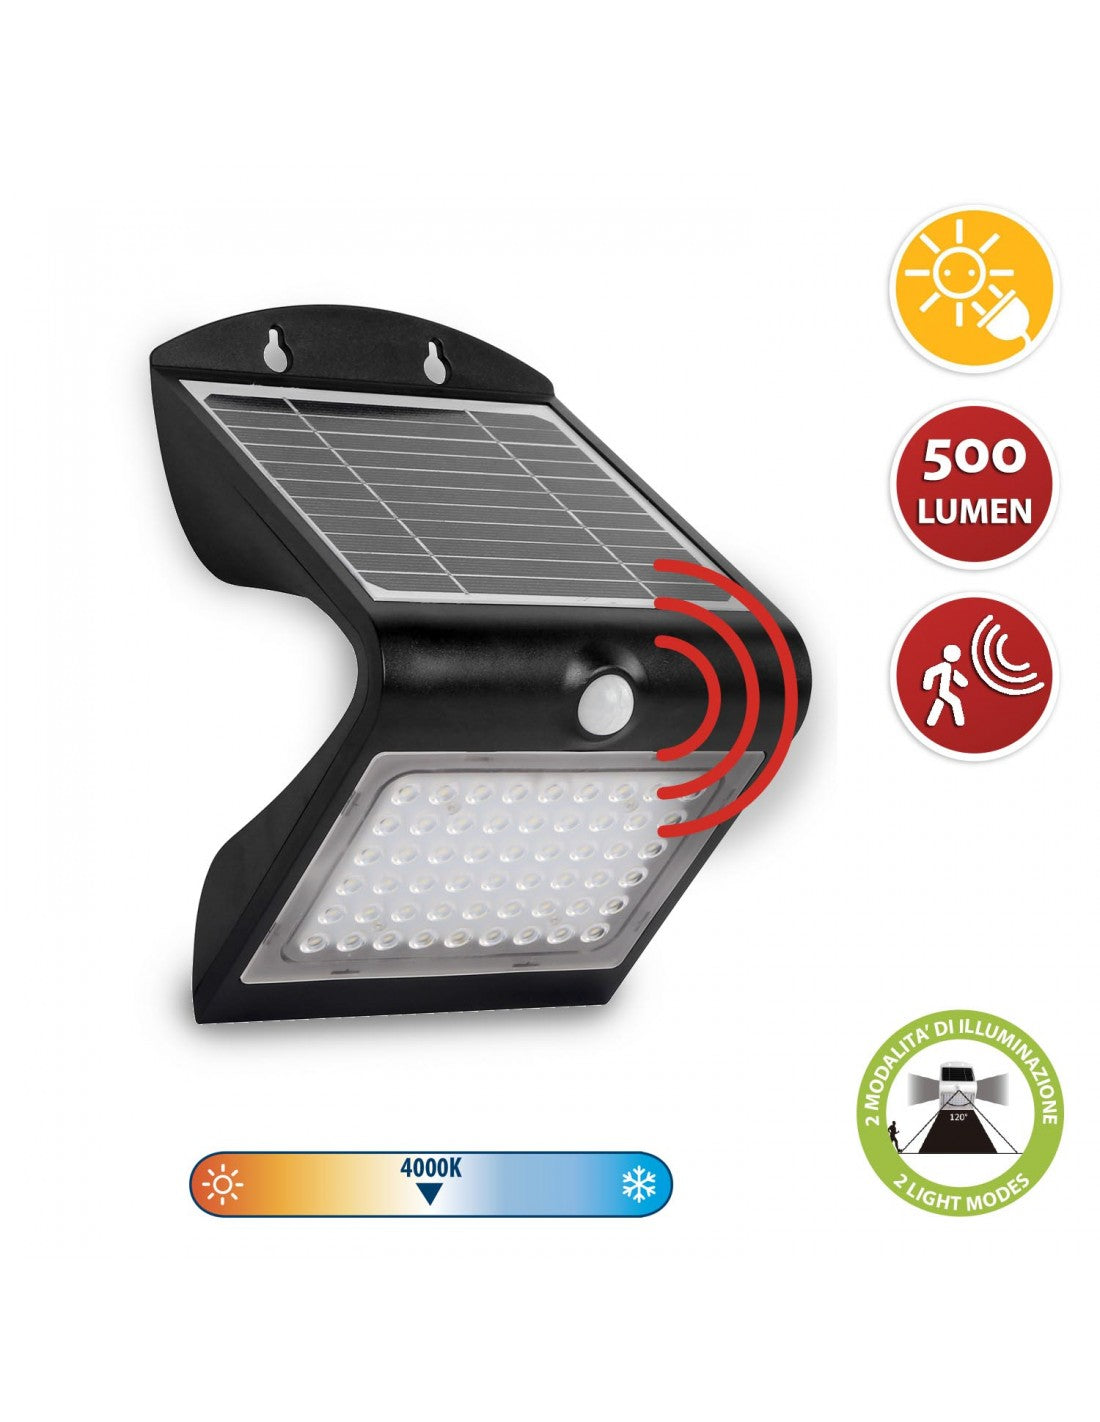 COLOMBA: 4 W (500 lm) solarbetriebene LED-Wandleuchte mit Bewegungssensor – Velamp SL237